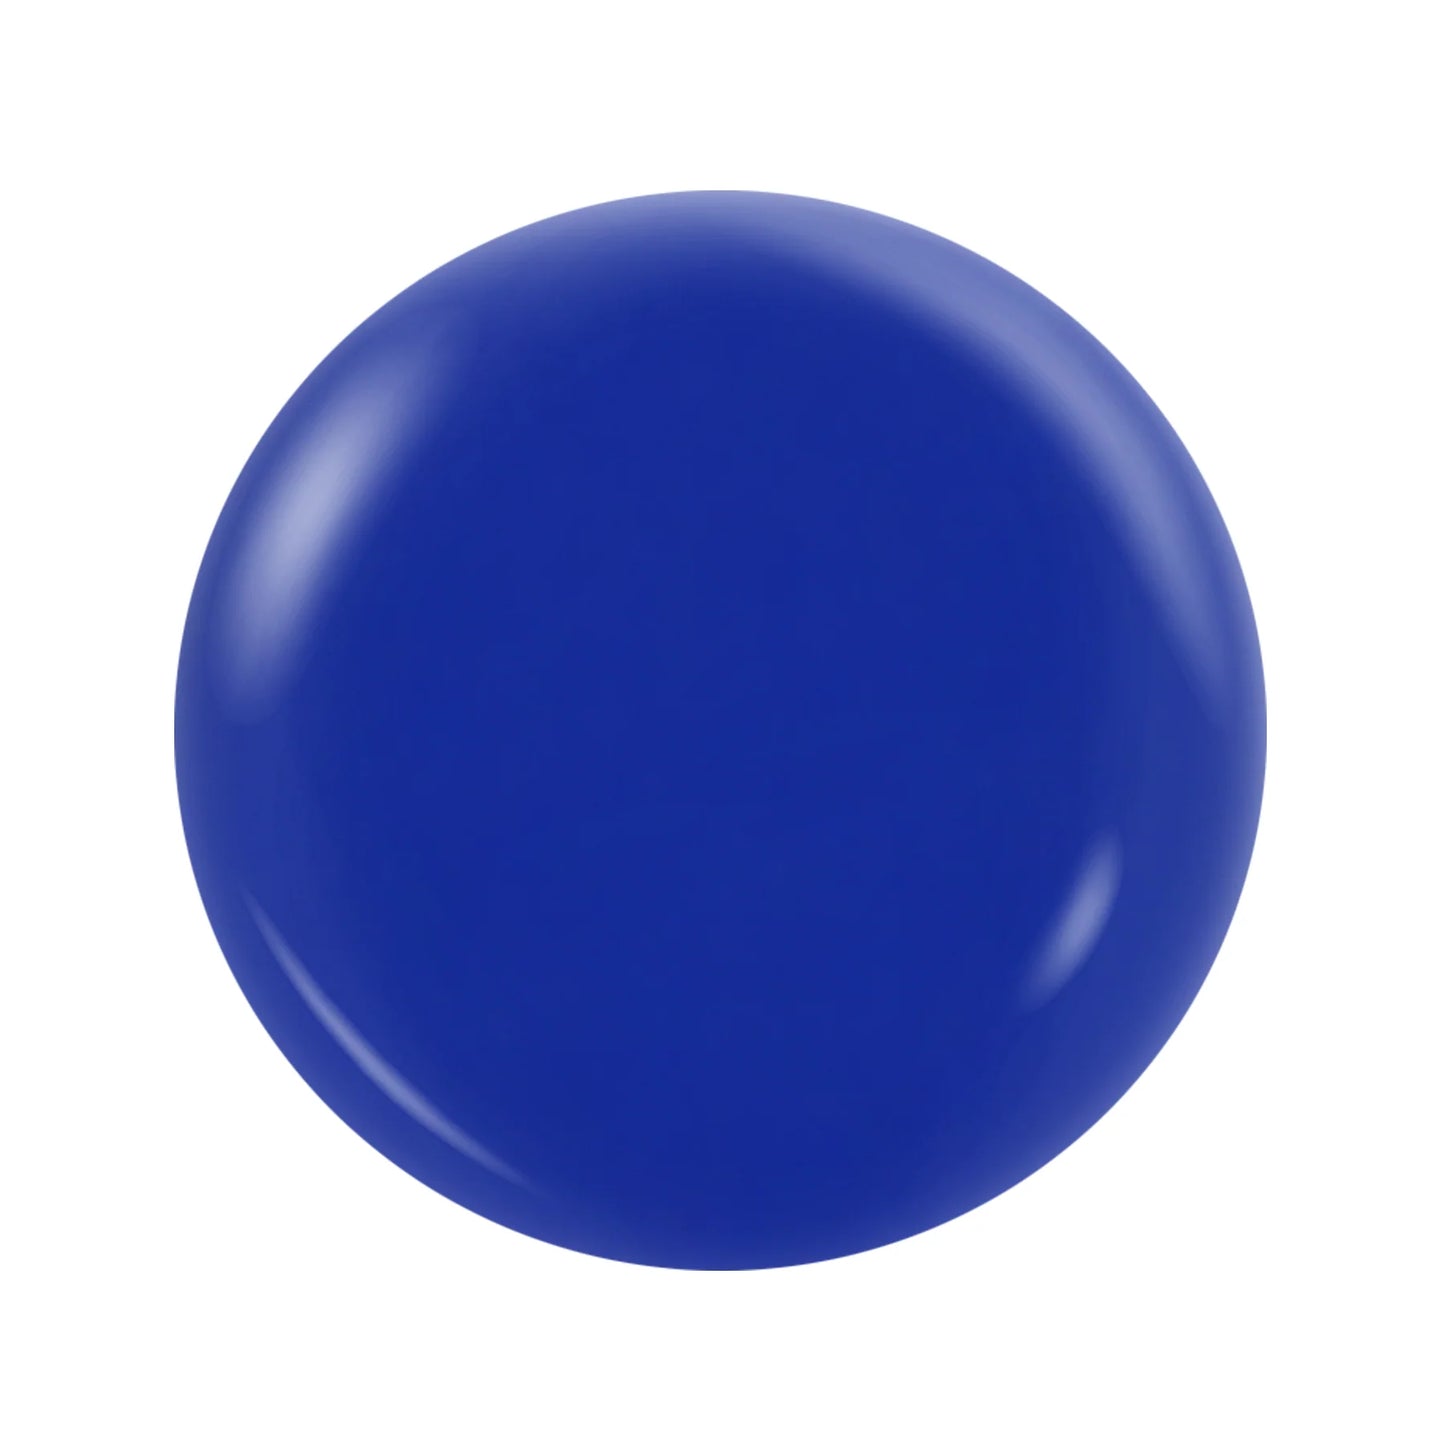 NotPolish - Nail Acrylic/Dip Powder | OG Collection | OG 134 Blue Ball Powder 2oz Jar